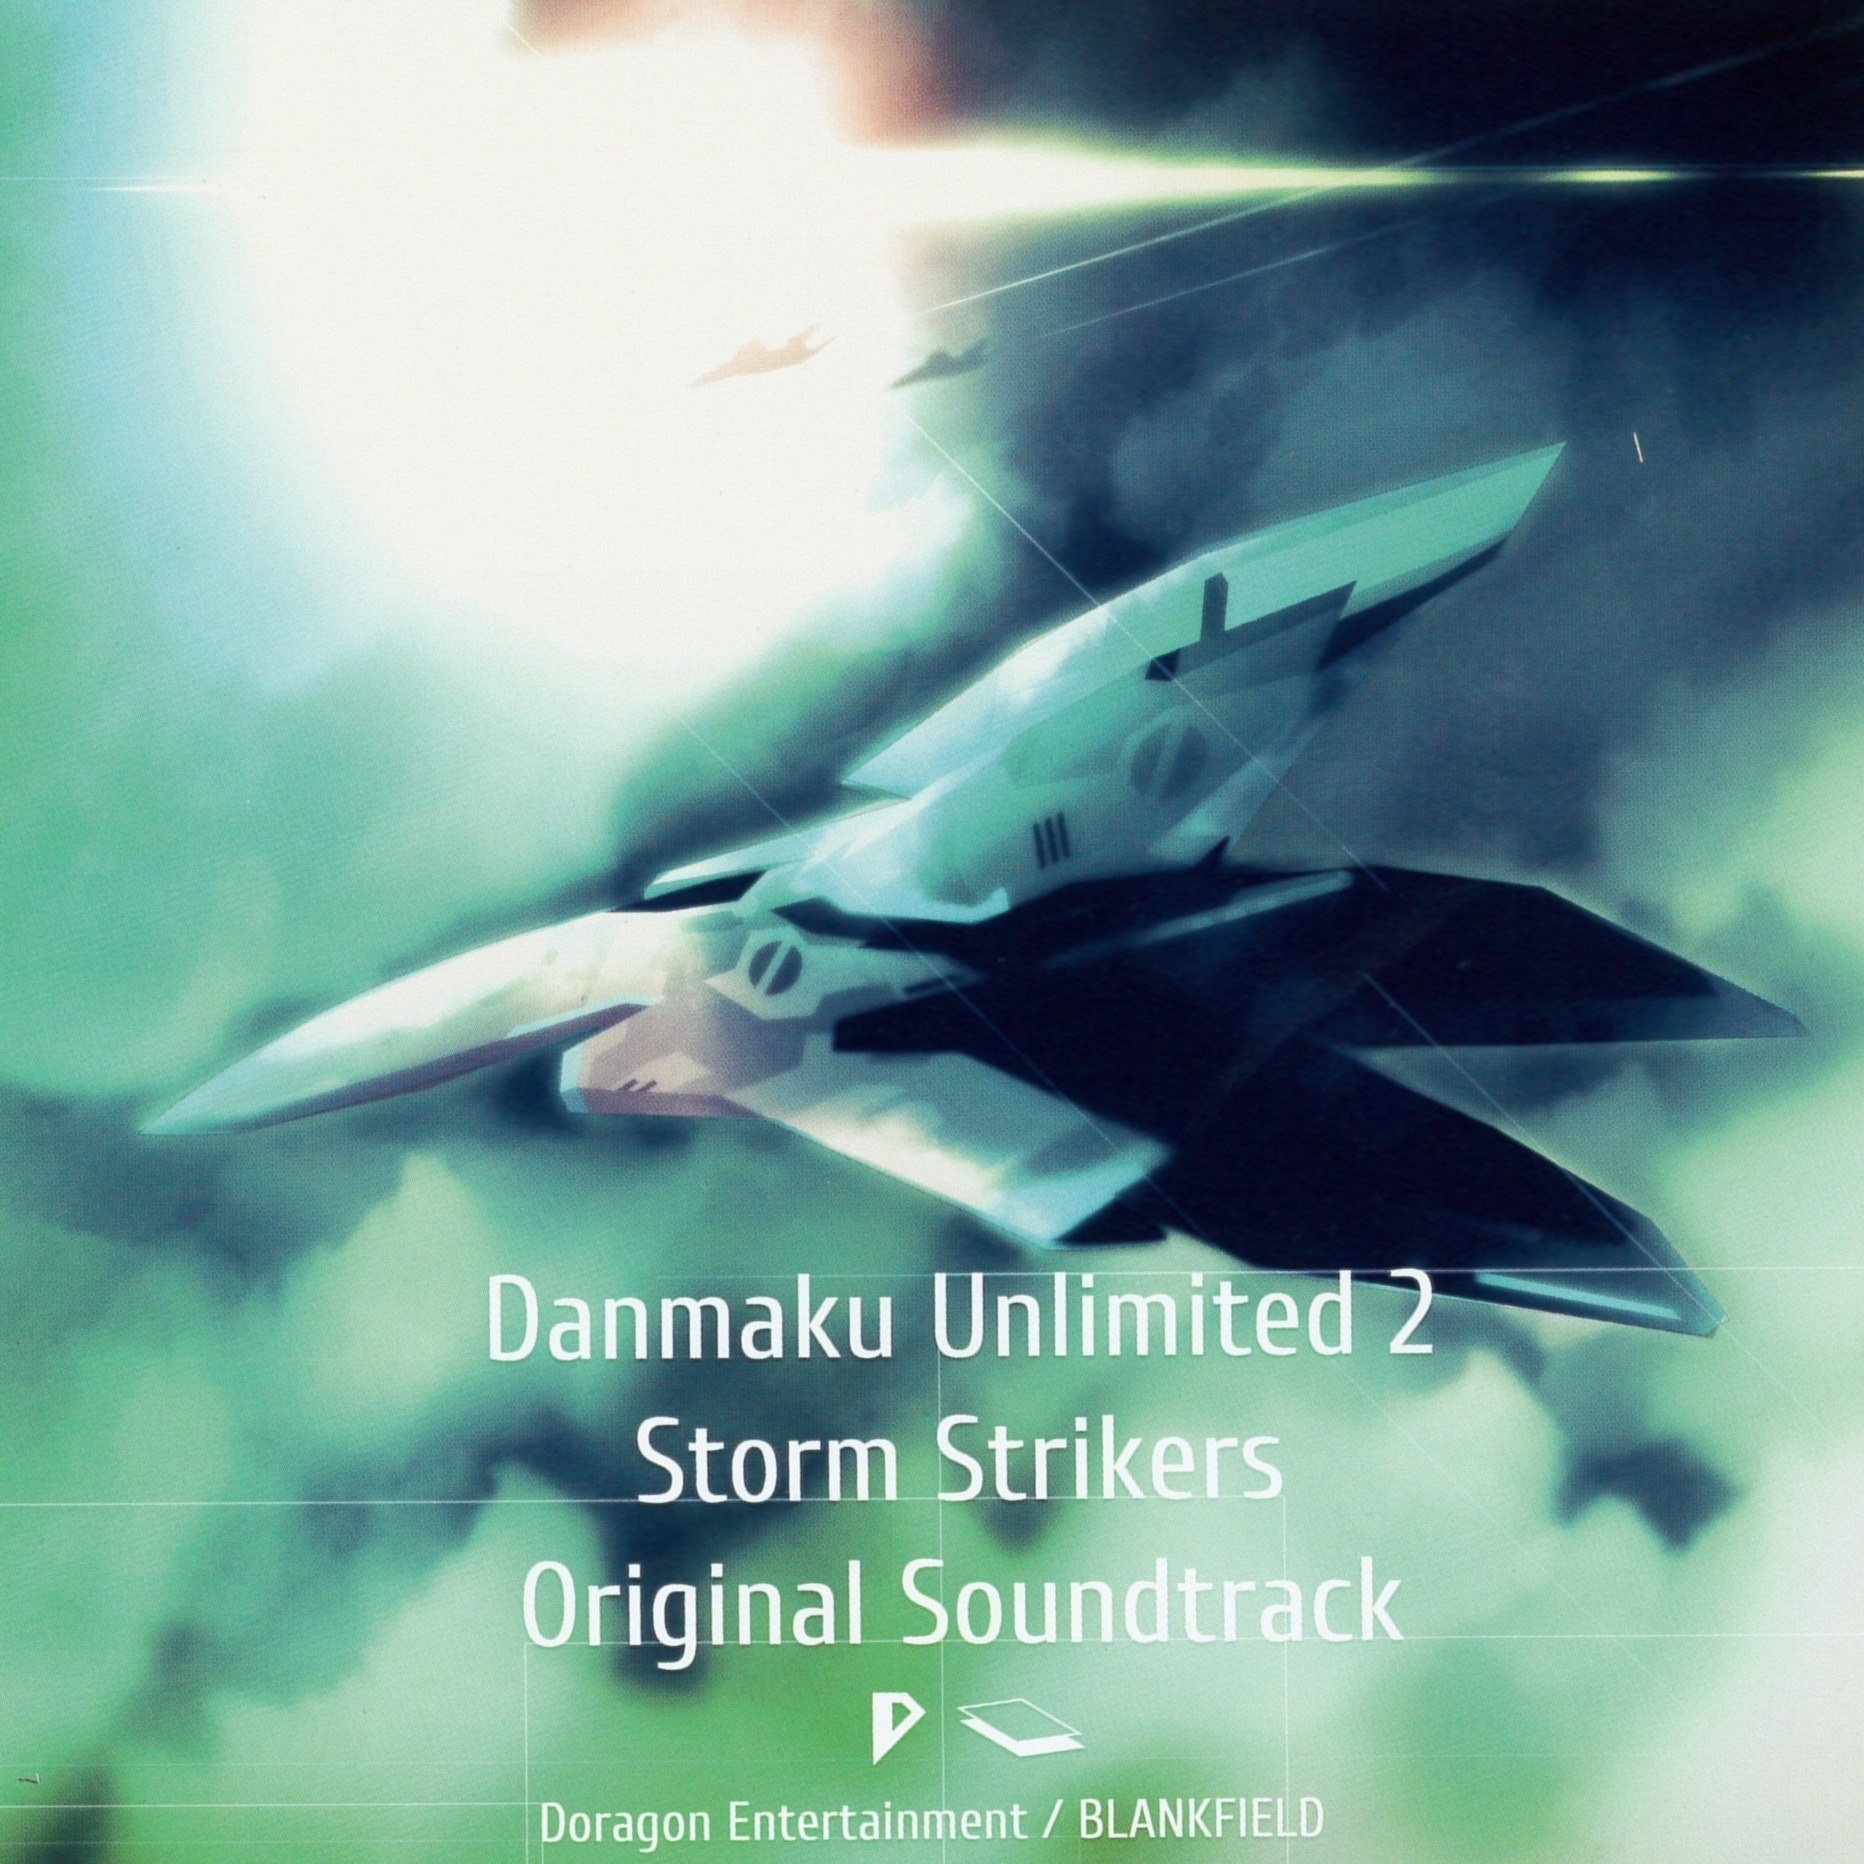 Danmaku Unlimited 2/Storm Strikers Original Soundtrack